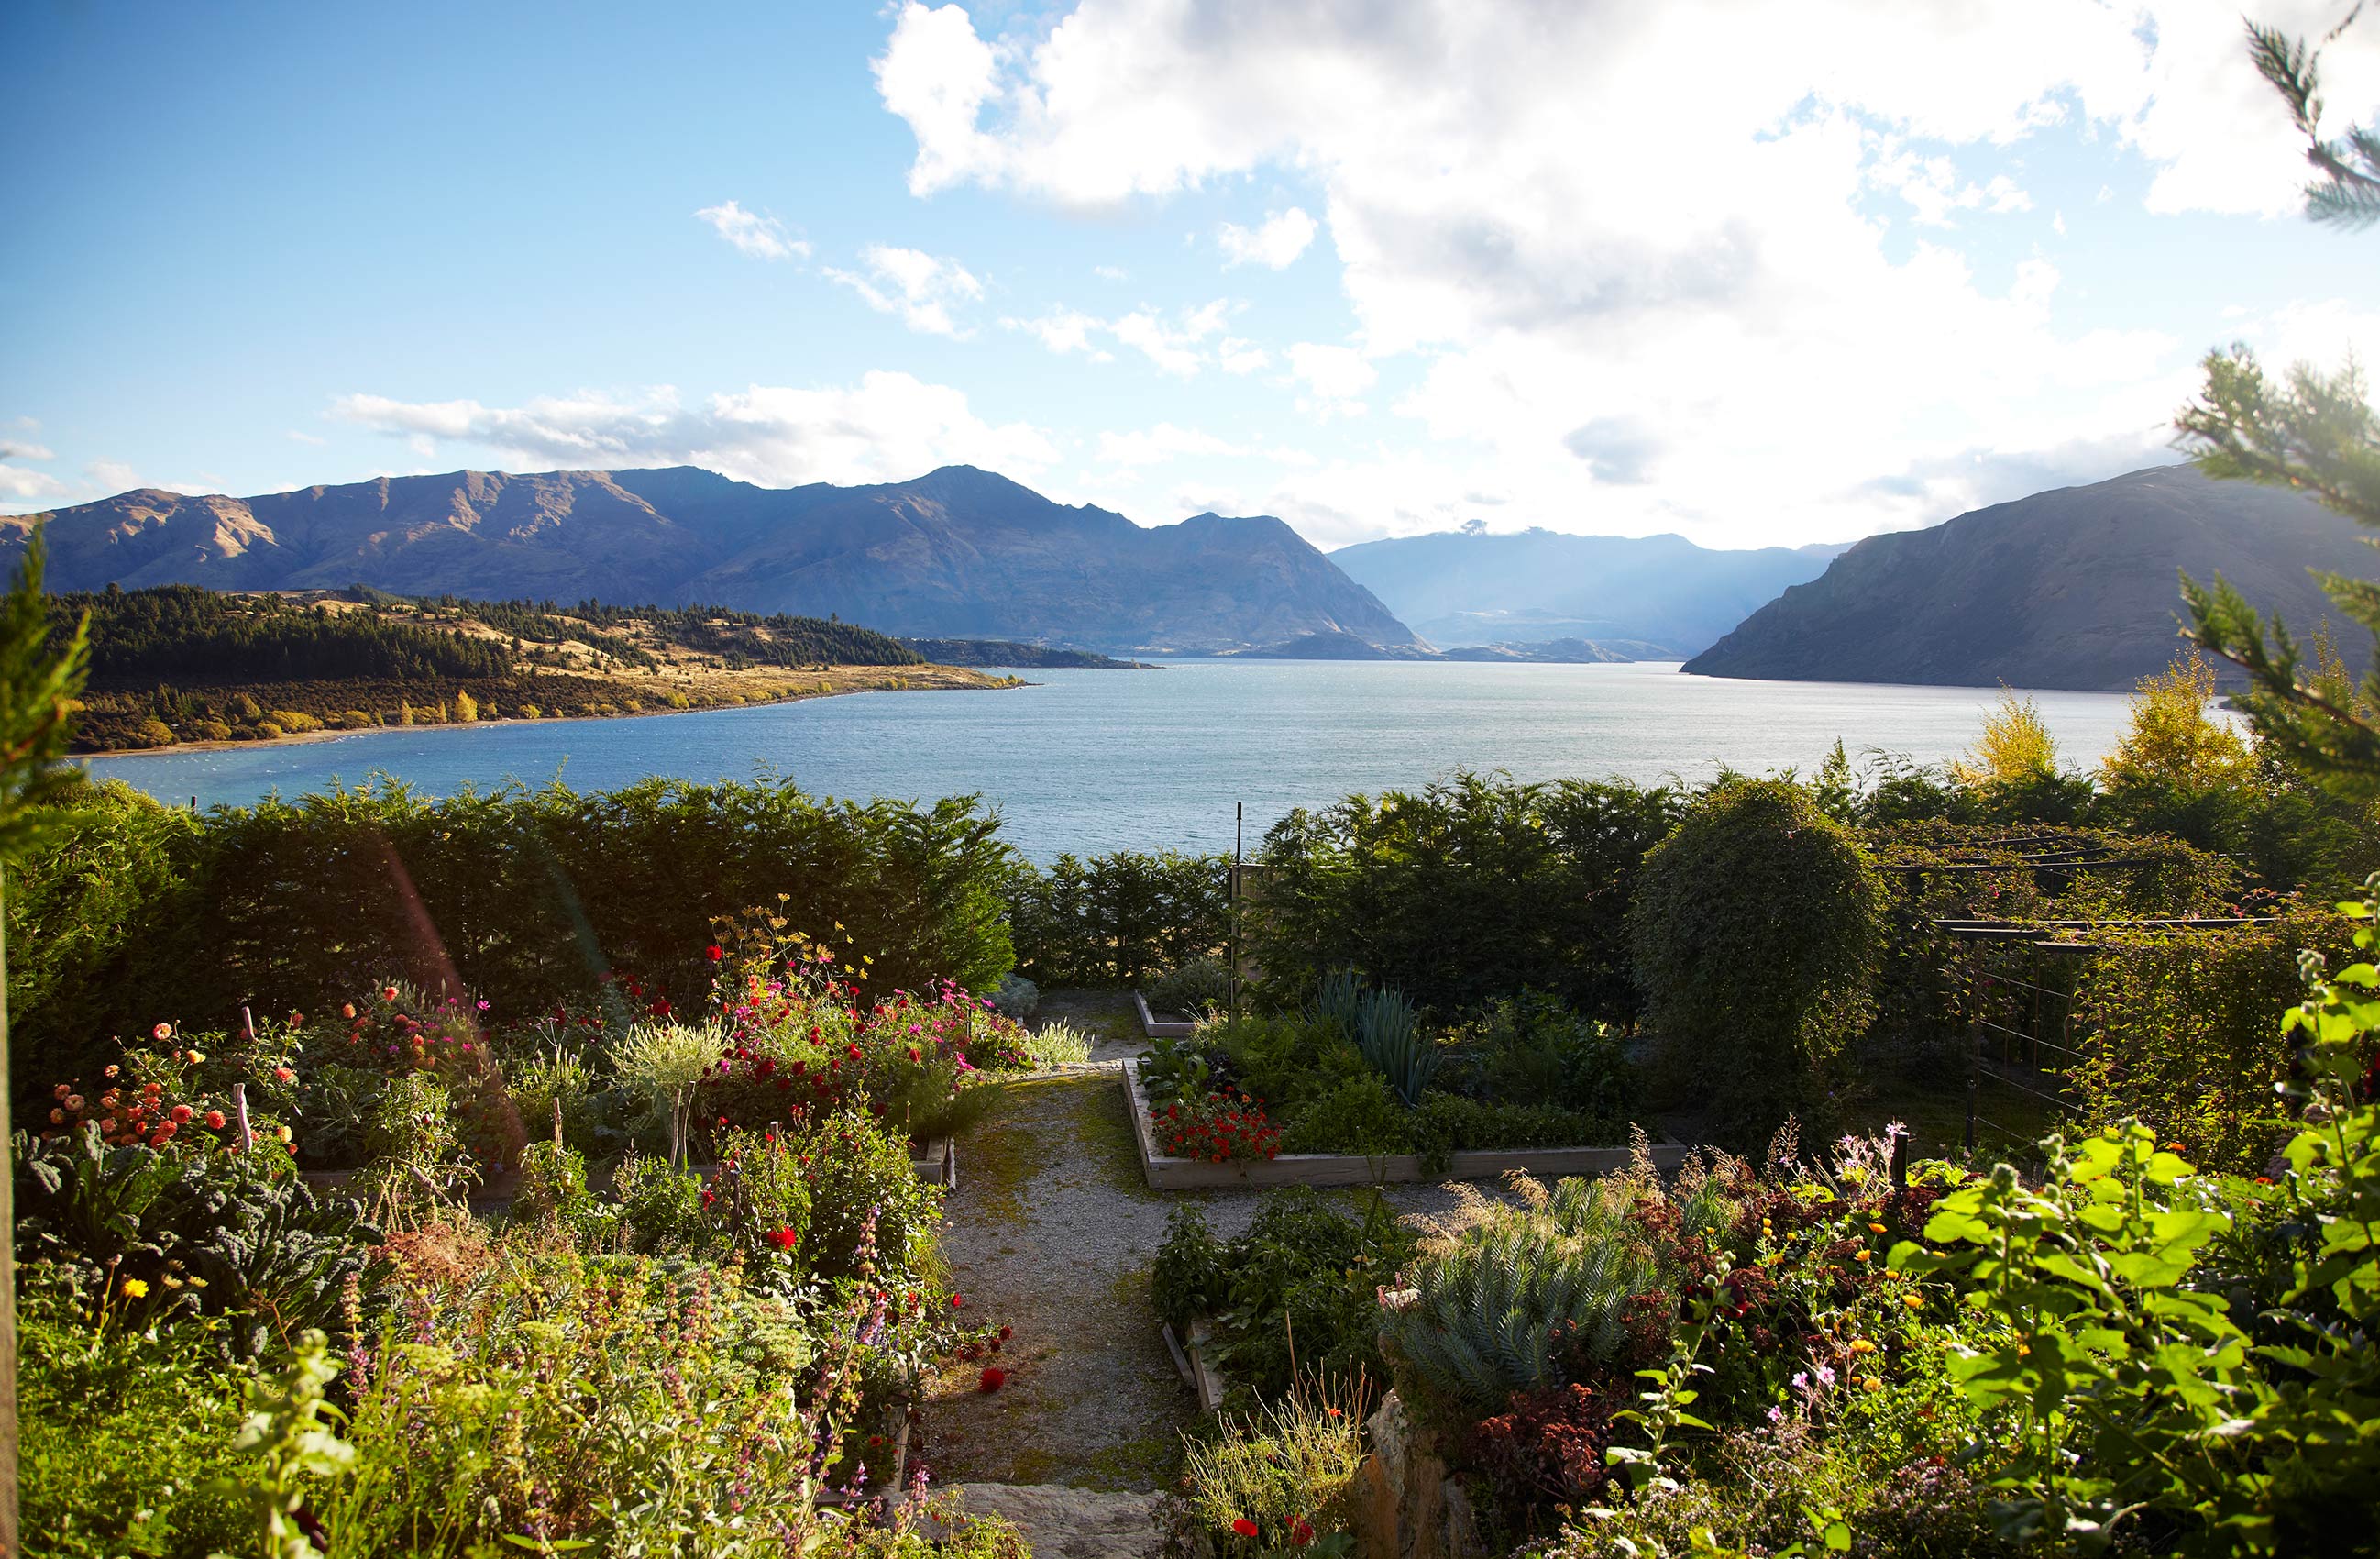 Sunny Lakeside New Zealand Garden • Lifestyle & Documentary Photography